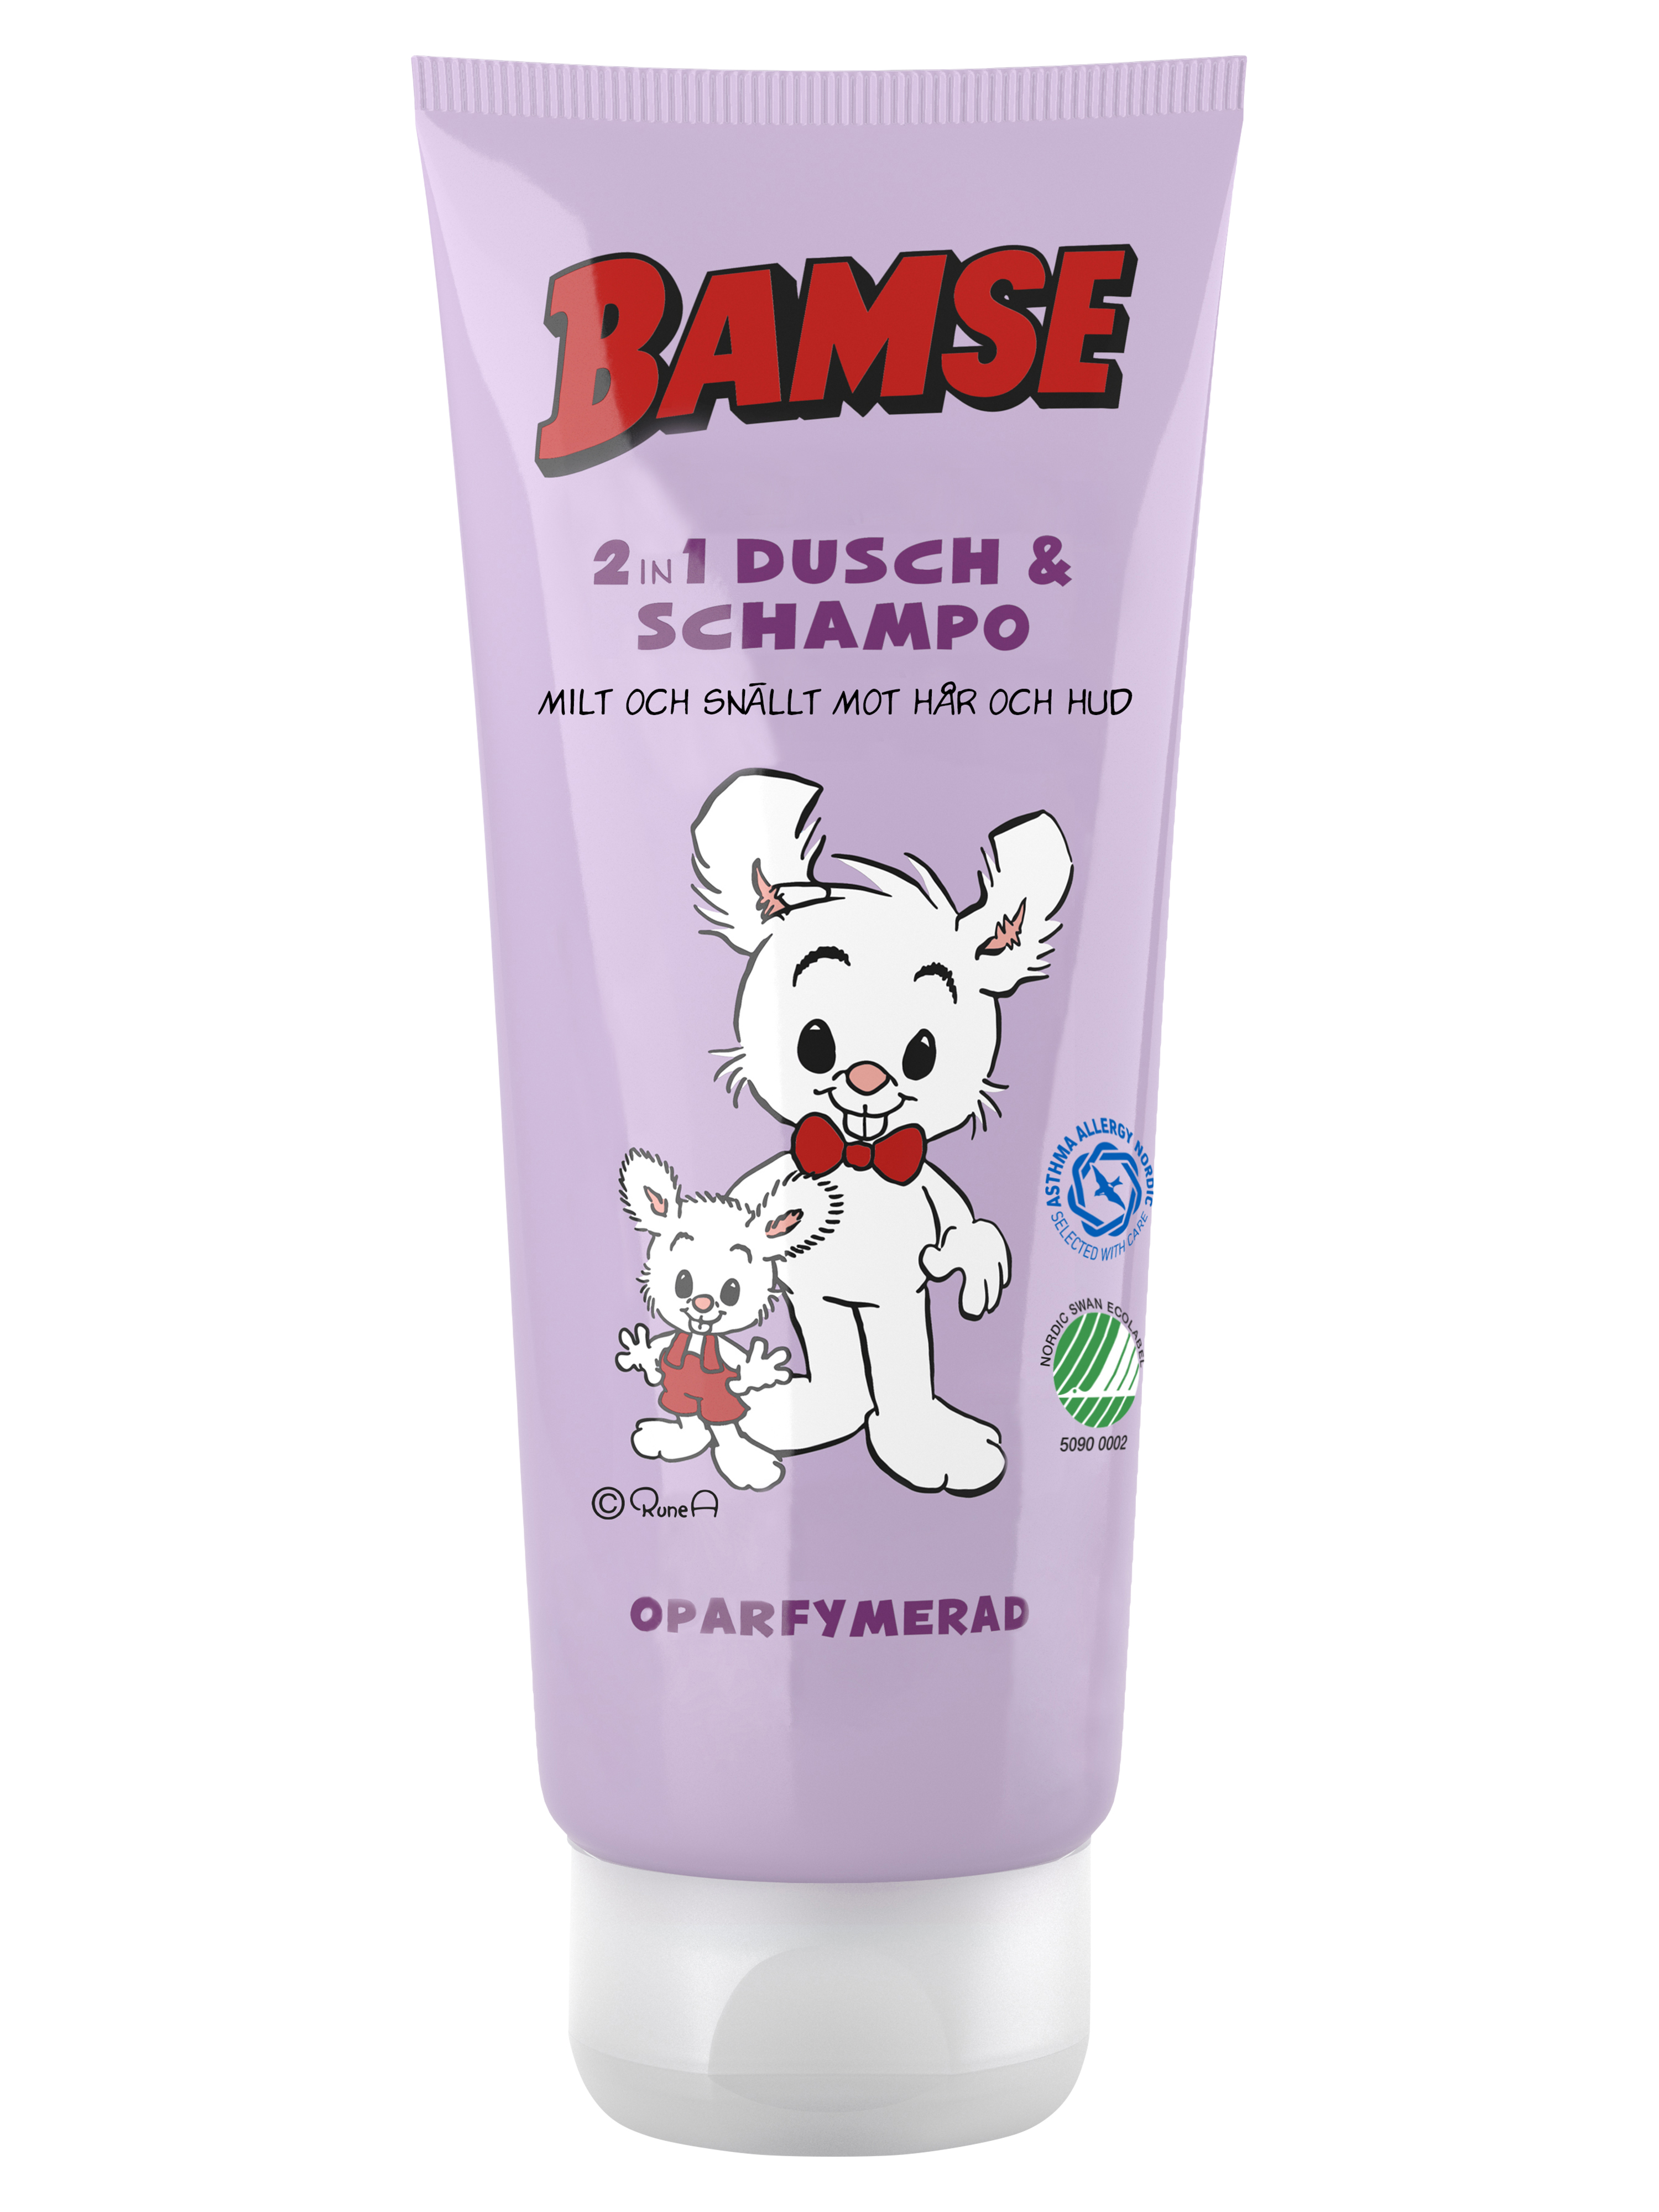 Bamse 2 in 1 Dusj & Shampoo u/p, 200 ml